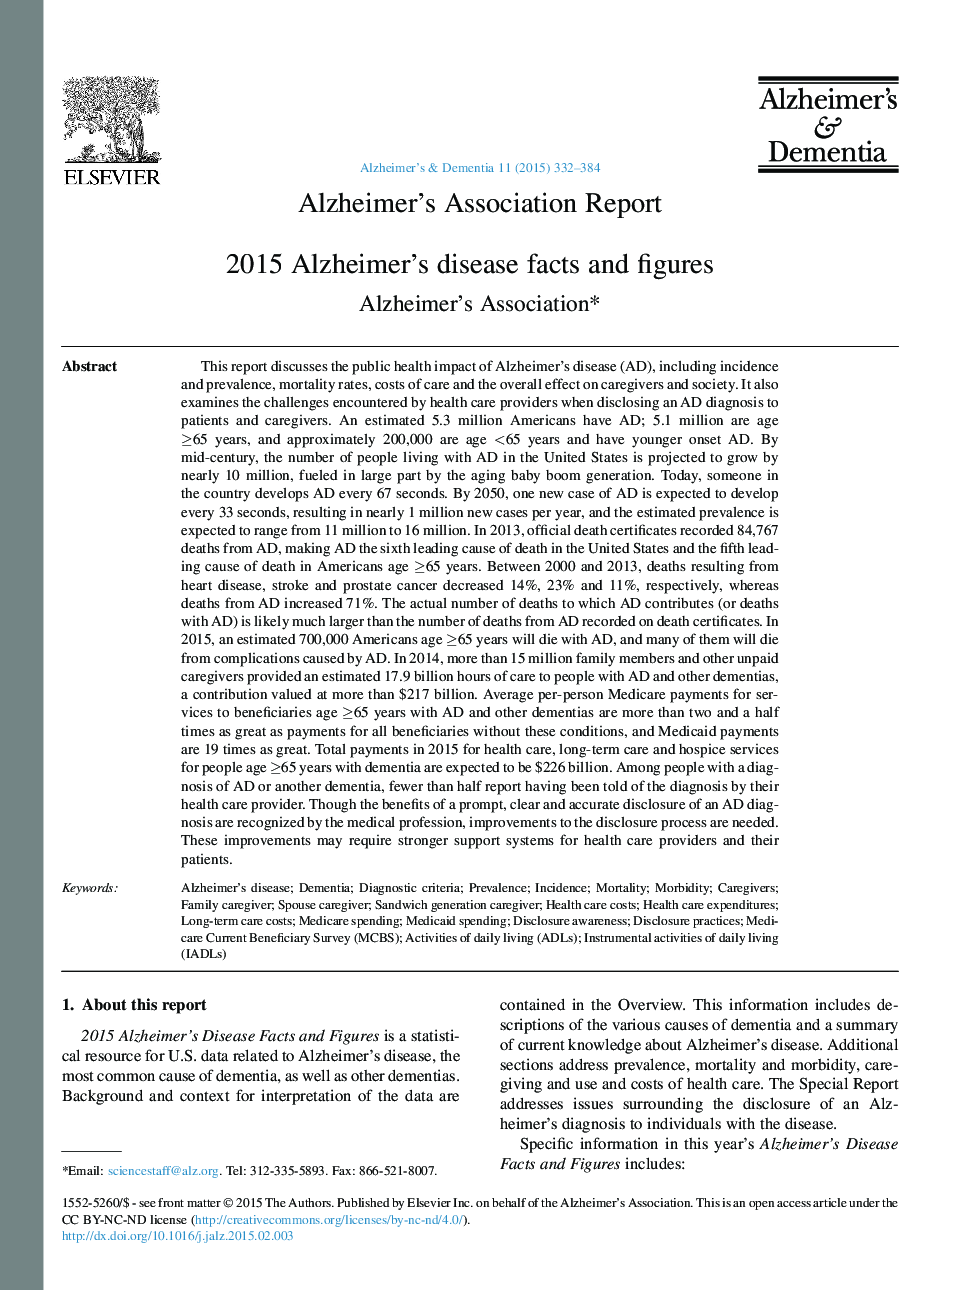 گزارش انجمن آلزایمر 2011 بیماری و بیماری آلزایمر واقعیت ها و ارقام 